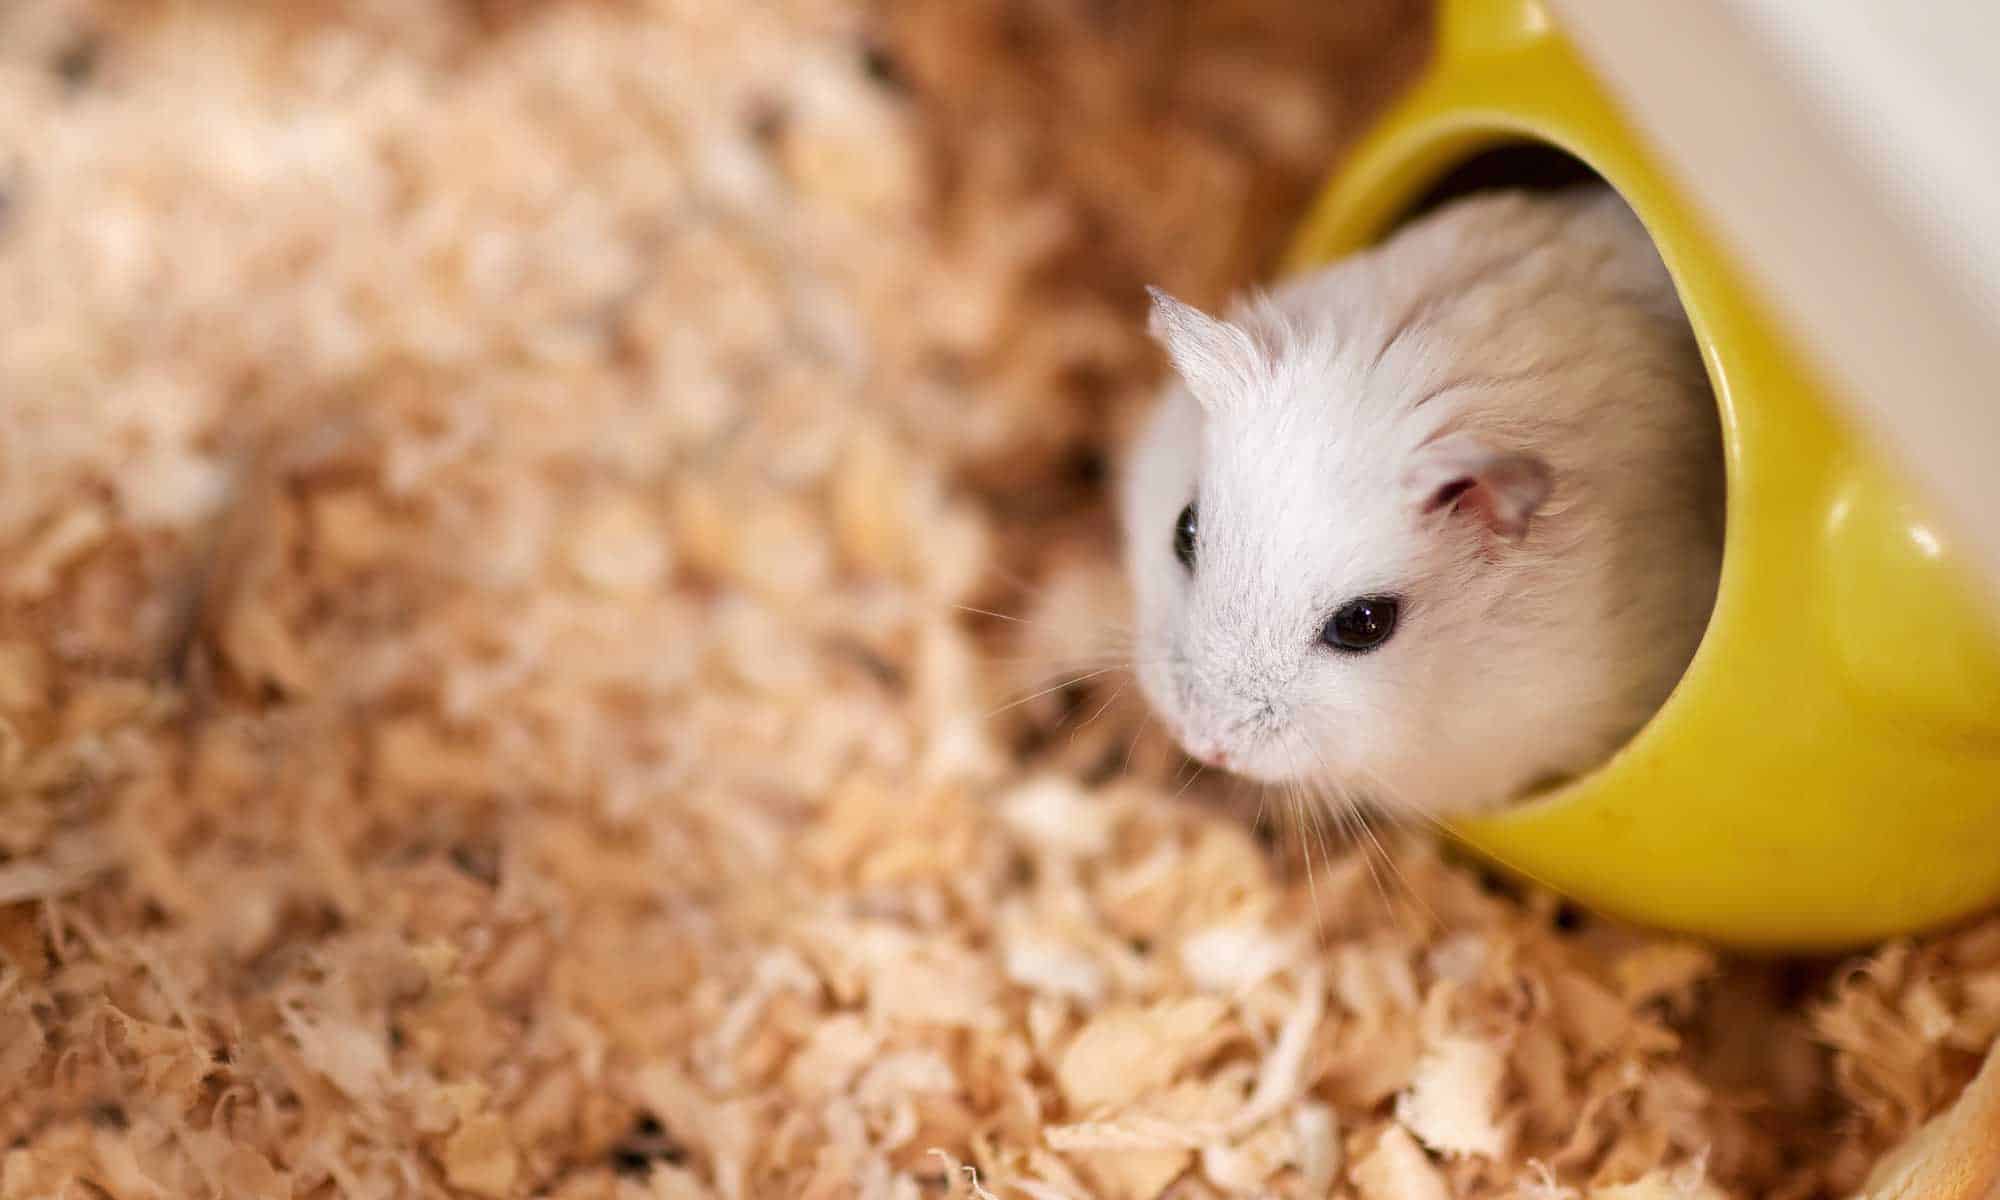 A hamster in a habitat